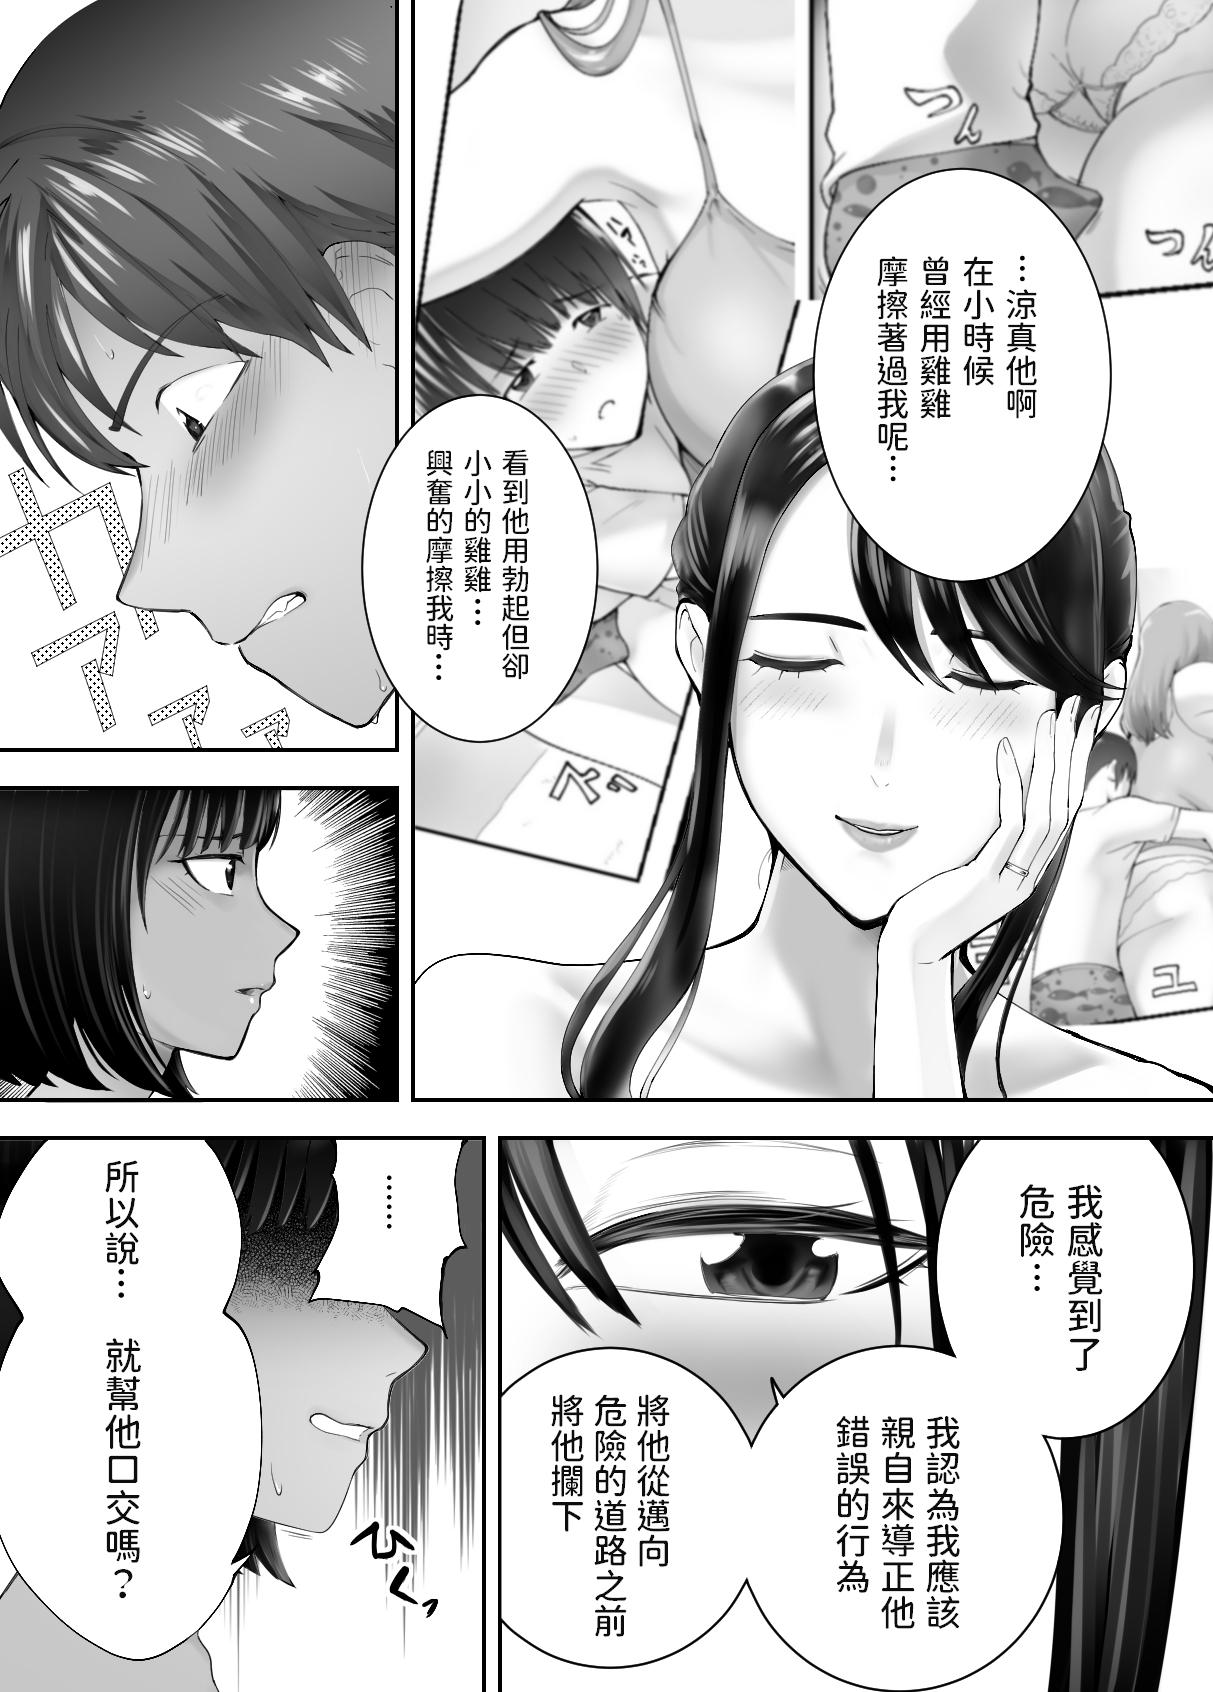 Curvy Osananajimi ga Mama to Yatte imasu. 7 - Original Curious - Page 6